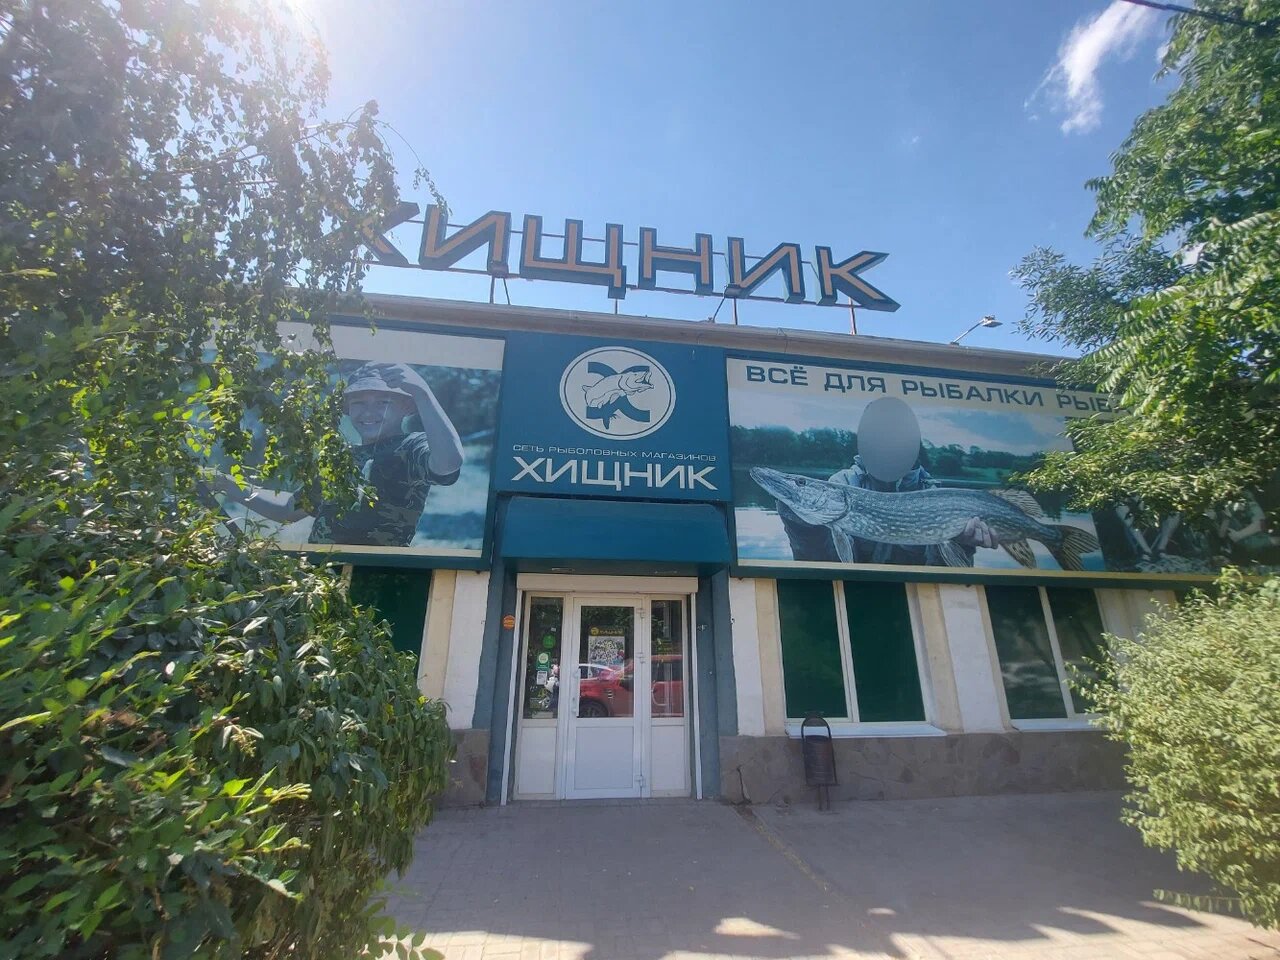 Магазин "Хищник" на Адмиралтейской в Астрахани